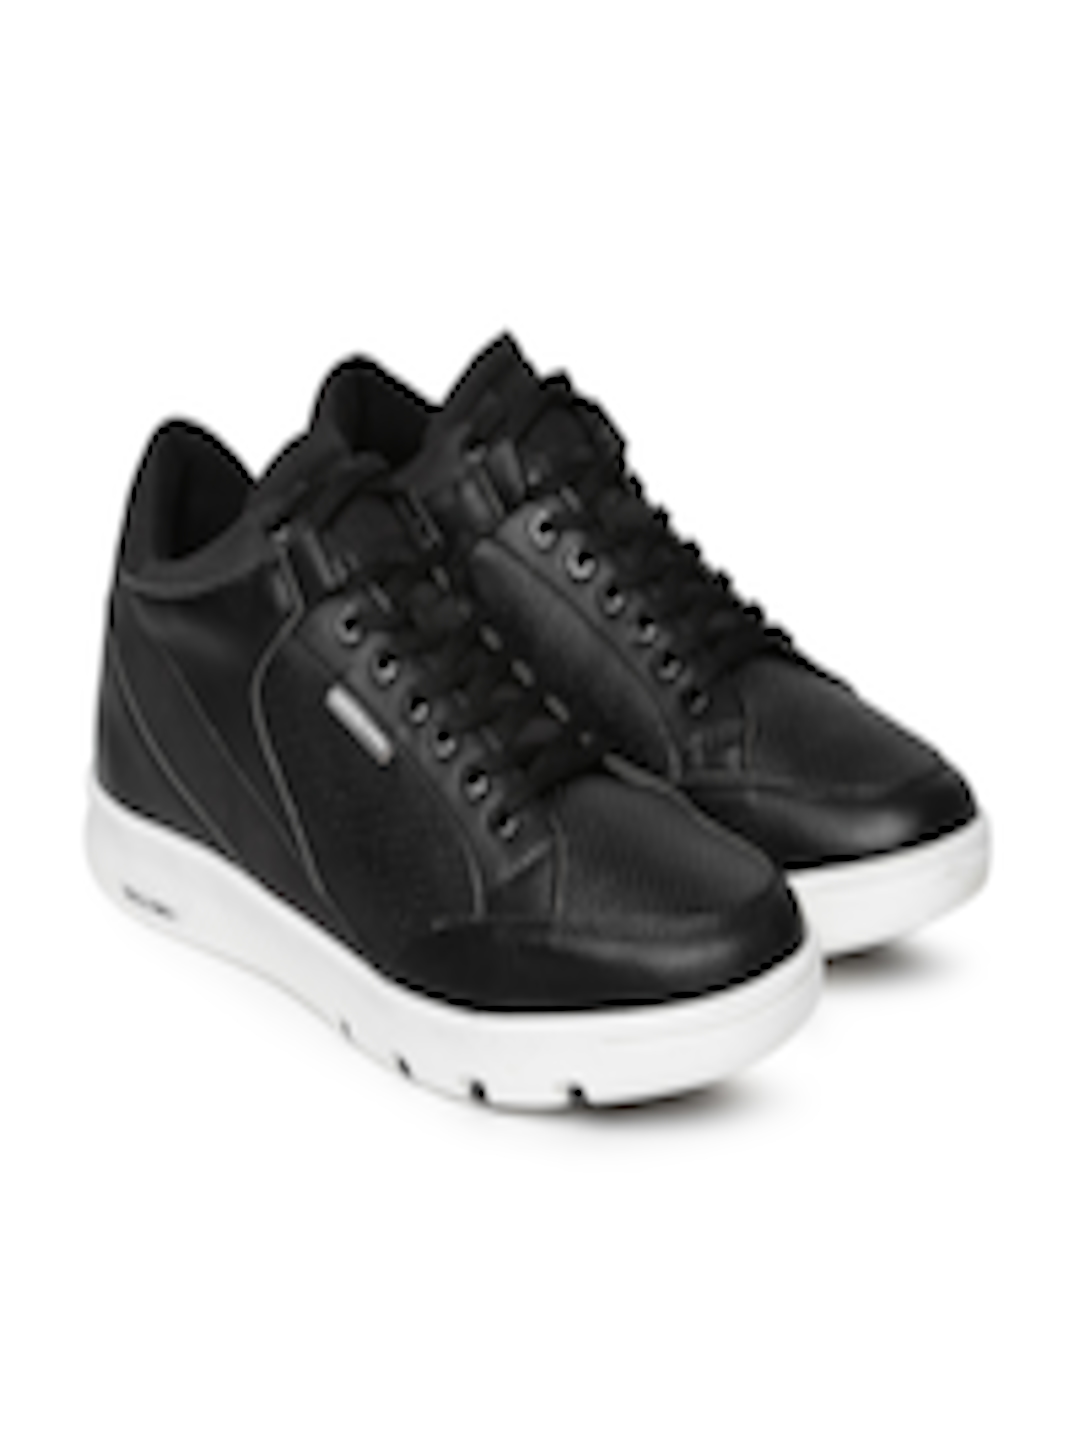 Buy Jack & Jones Men Black Sneakers - Casual Shoes for Men 7713670 | Myntra